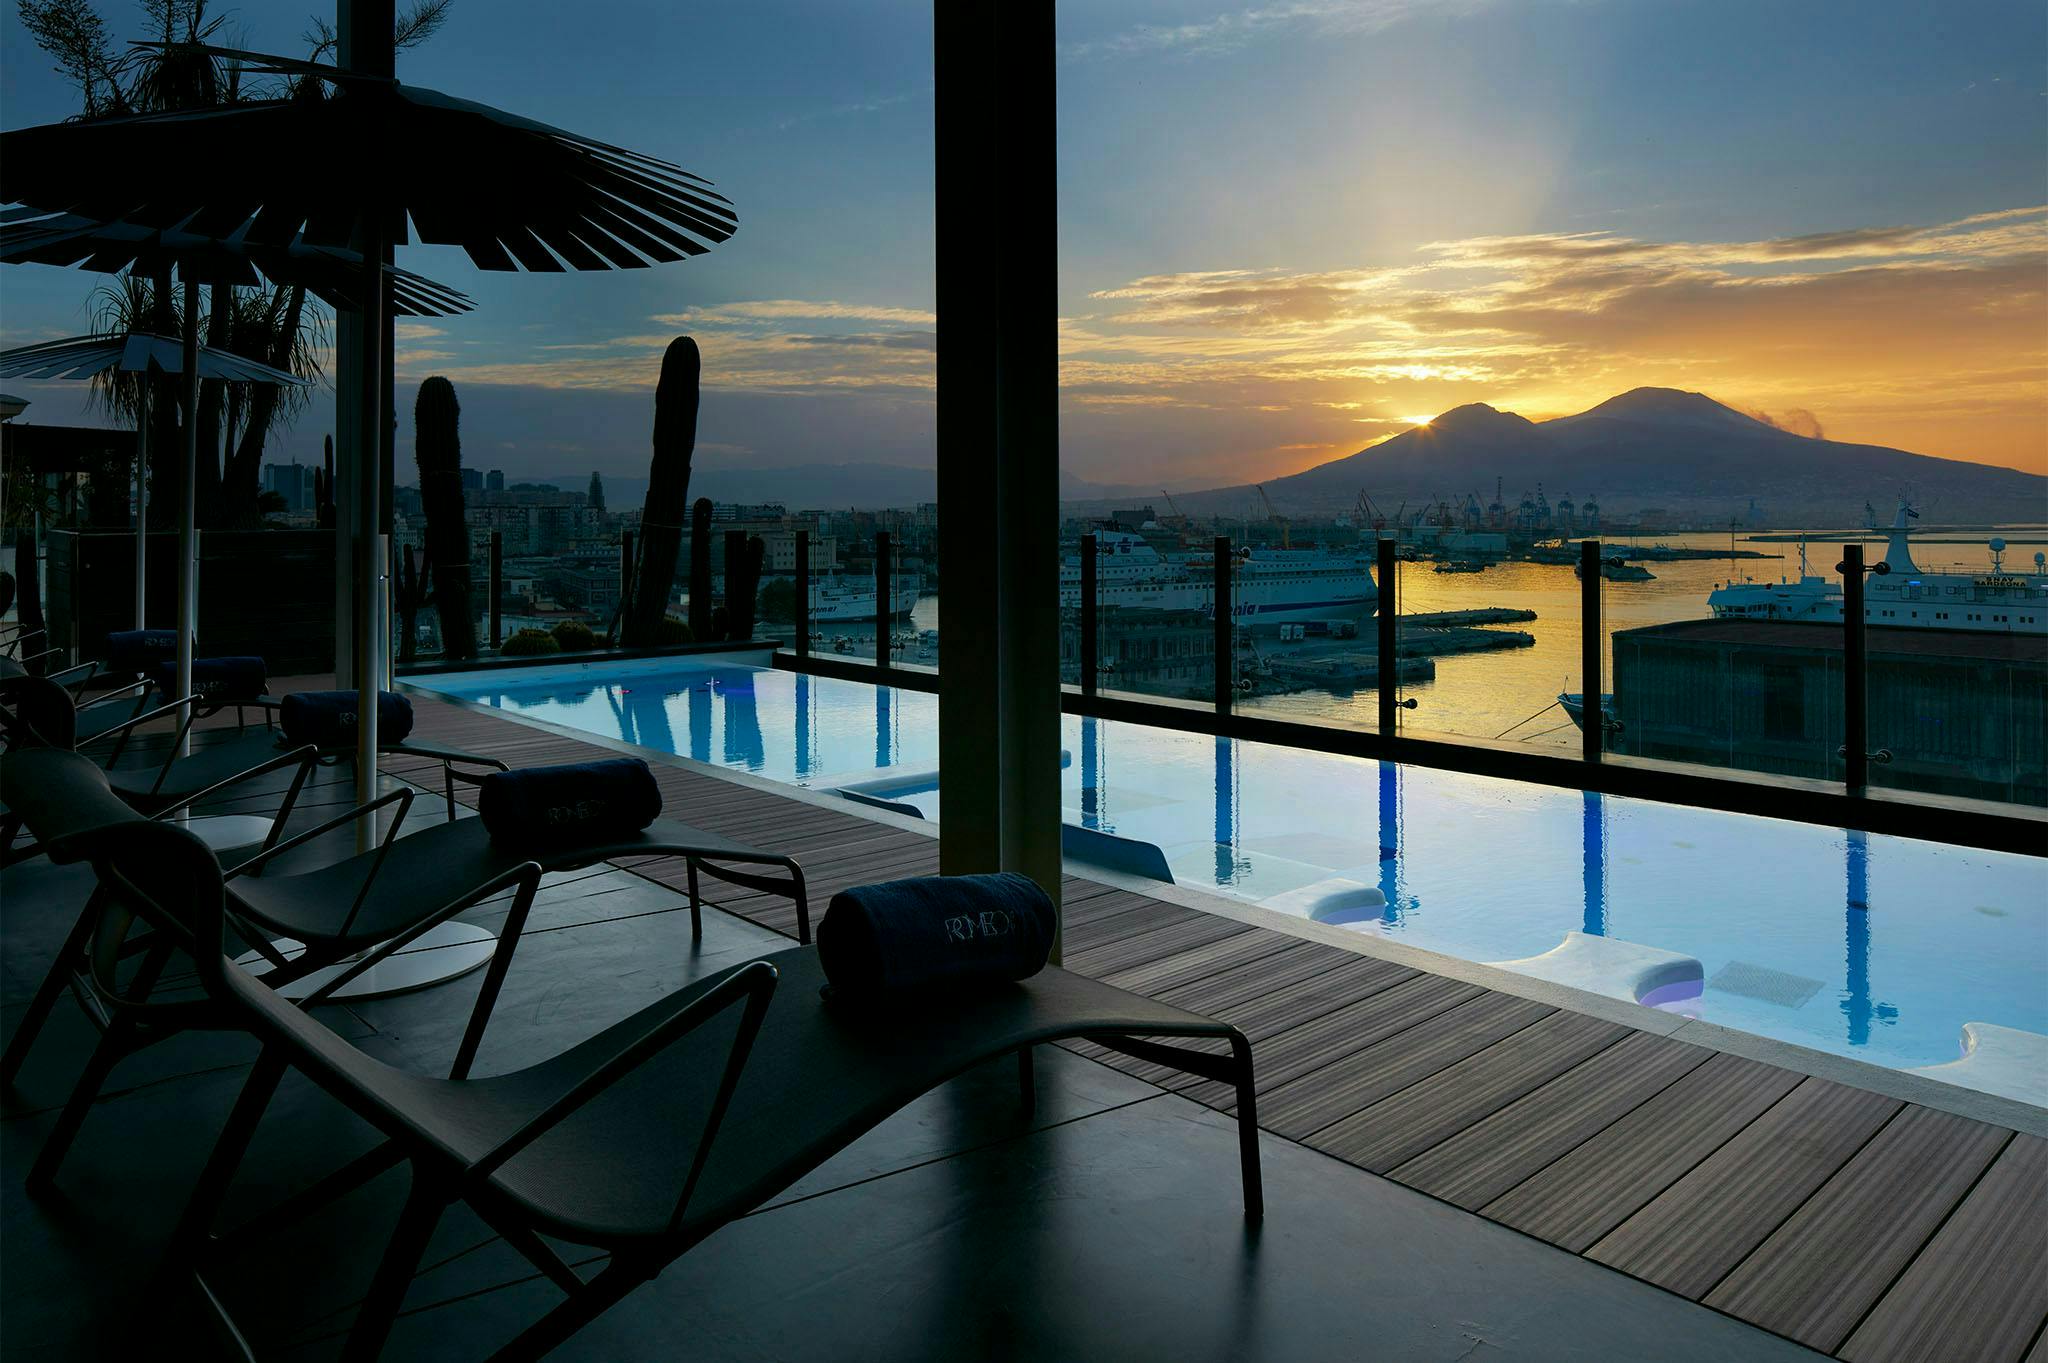 hotel resort pool water swimming pool outdoors scenery summer boat chair